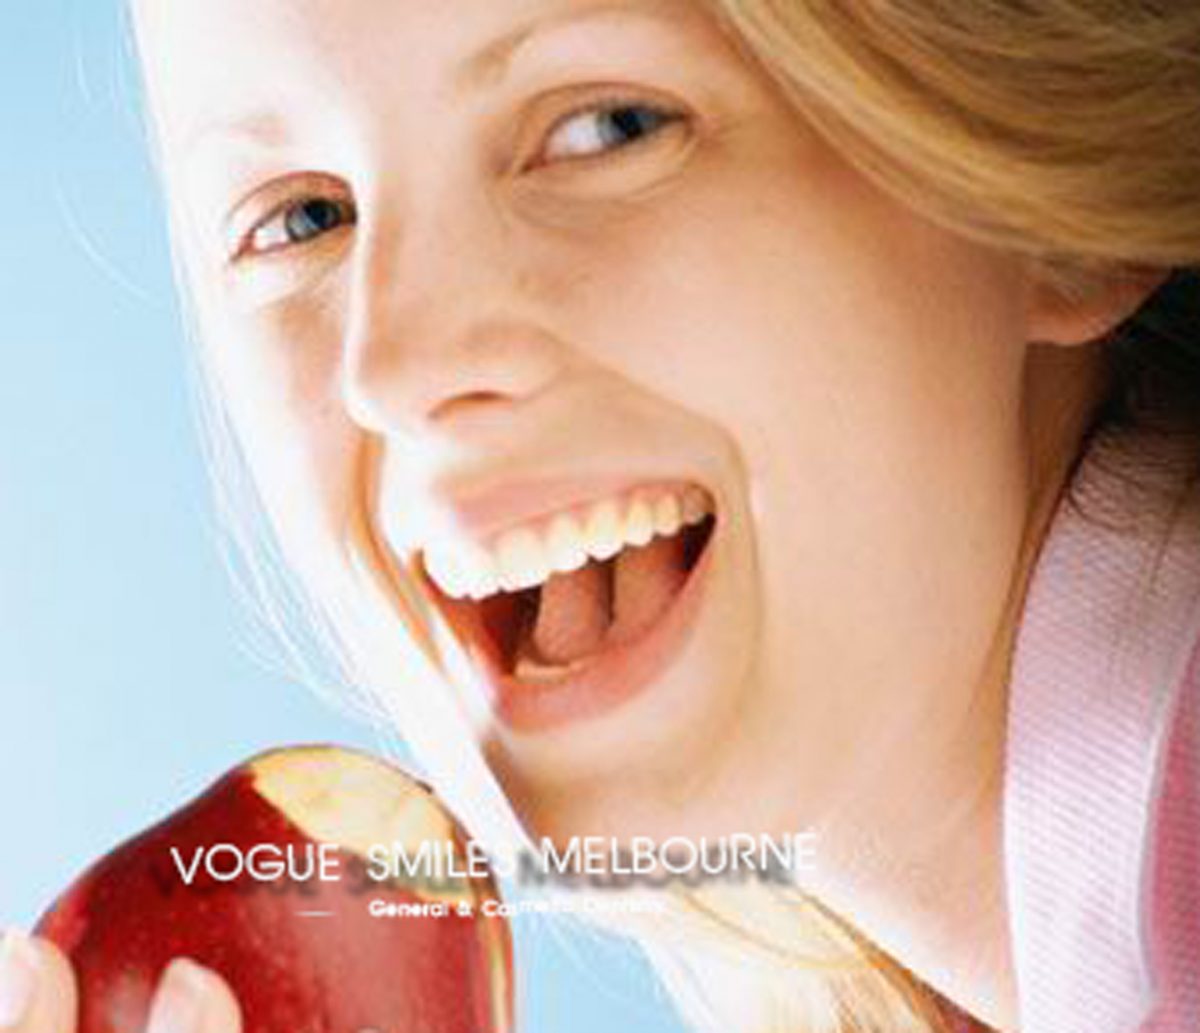 Dentist Melbourne - Melbourne CBD Dental Clinic - DENTIST NEAR ME | VOGUE SMILES MELBOURNE-BEST DENTIST IN MELBOURNE REVIEWS